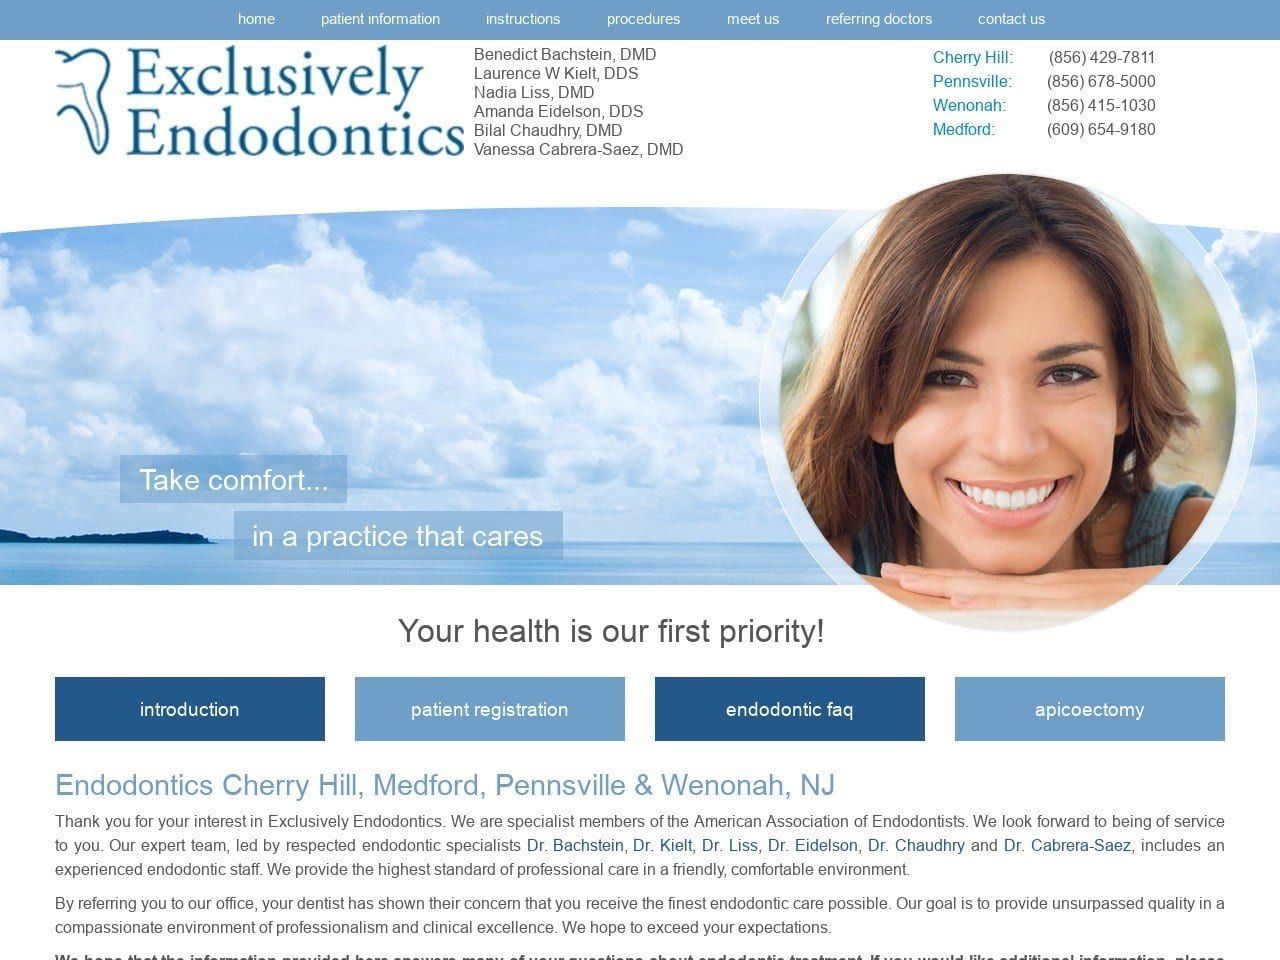 Exclusively Endodontics Website Screenshot from rootcanalnj.com